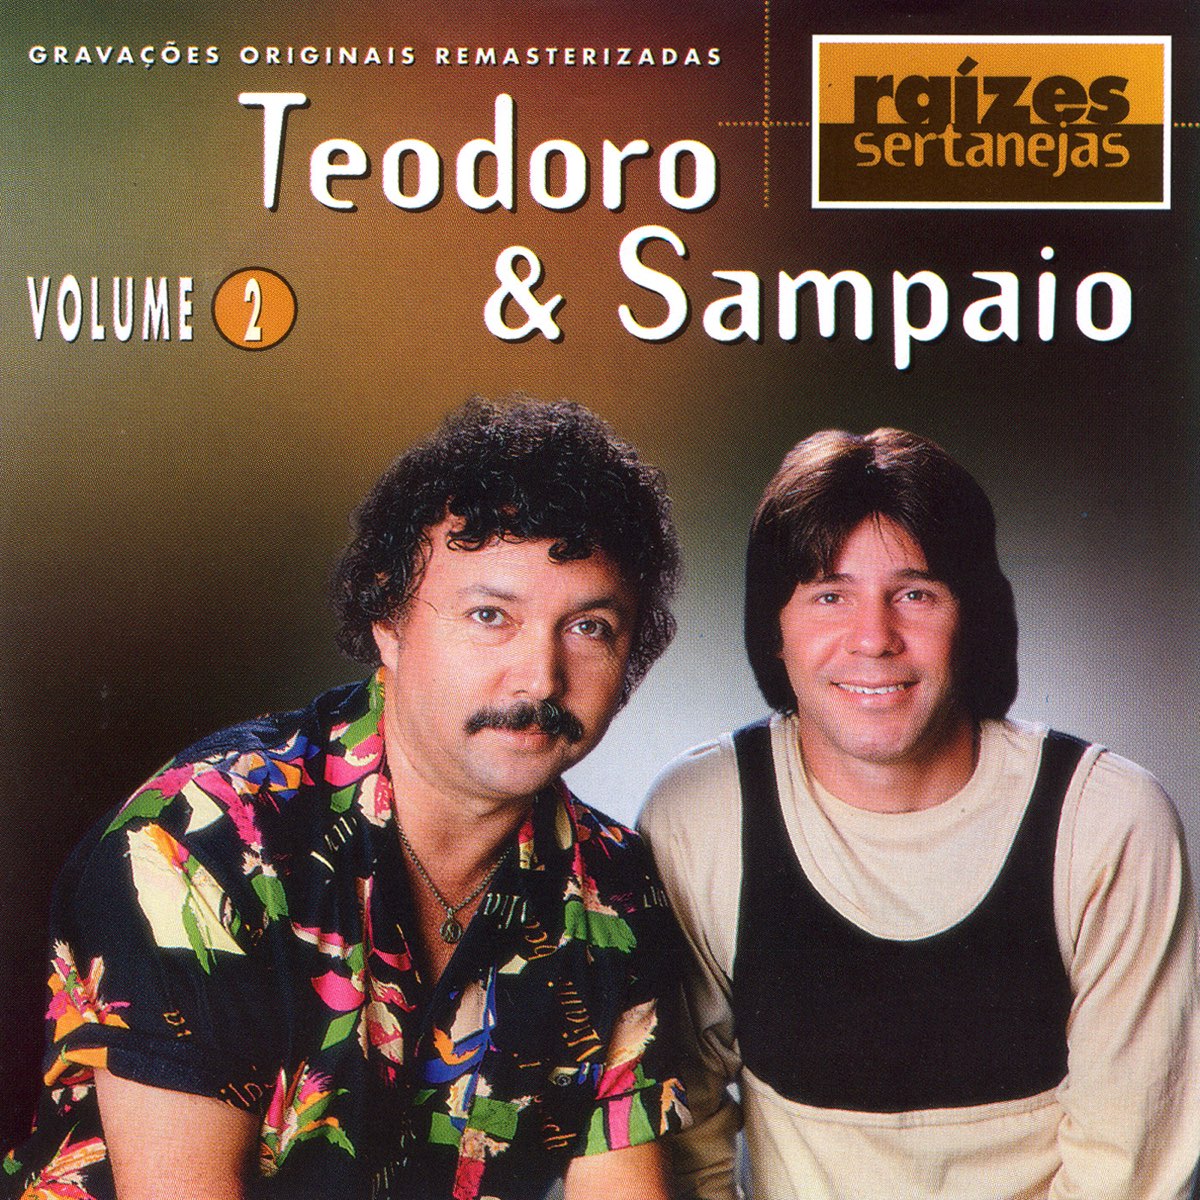 Raizes Sertanejas, Vol.2 de Teodoro & Sampaio no Apple Music